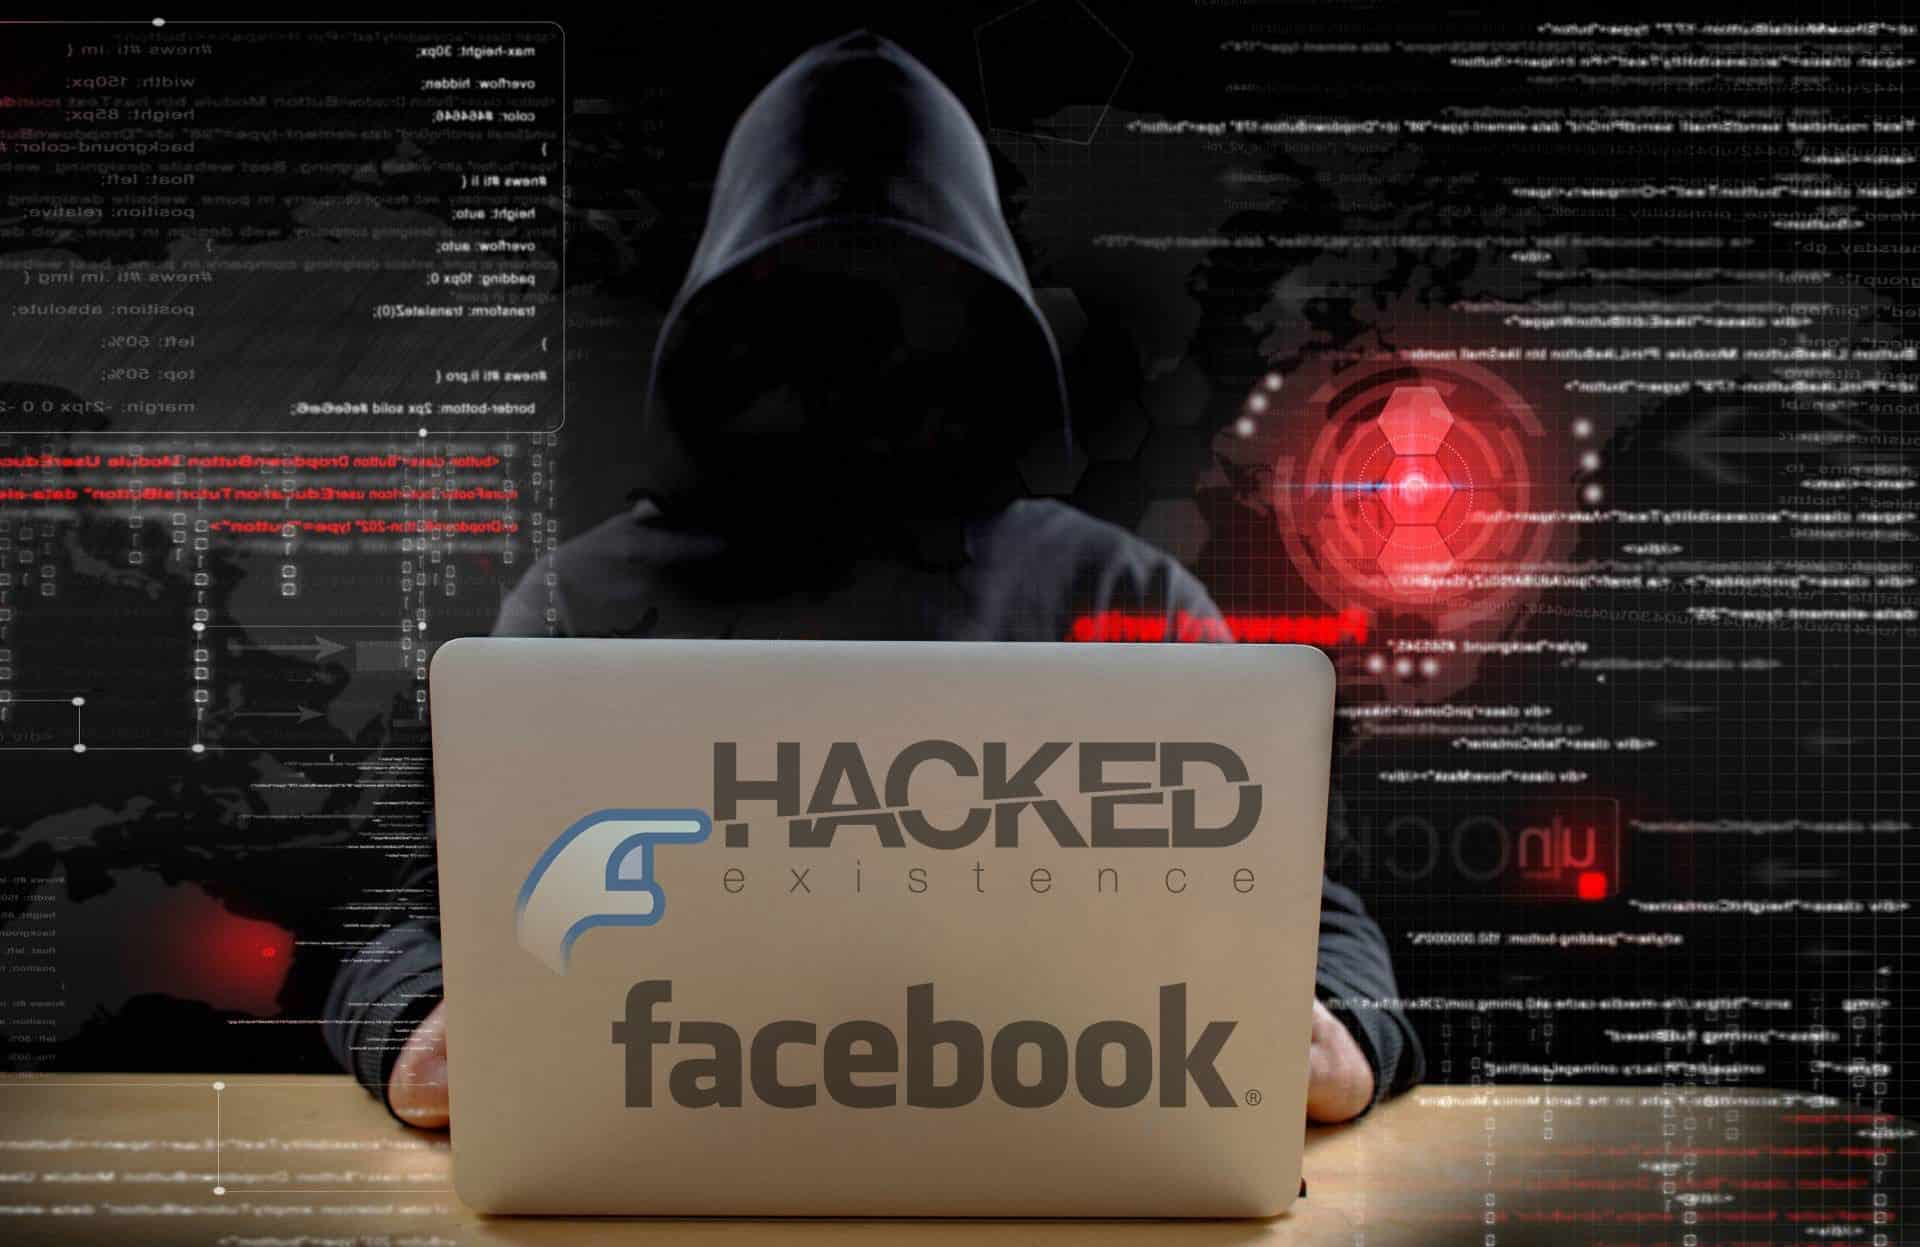 hackear facebook 30 segundos gratis